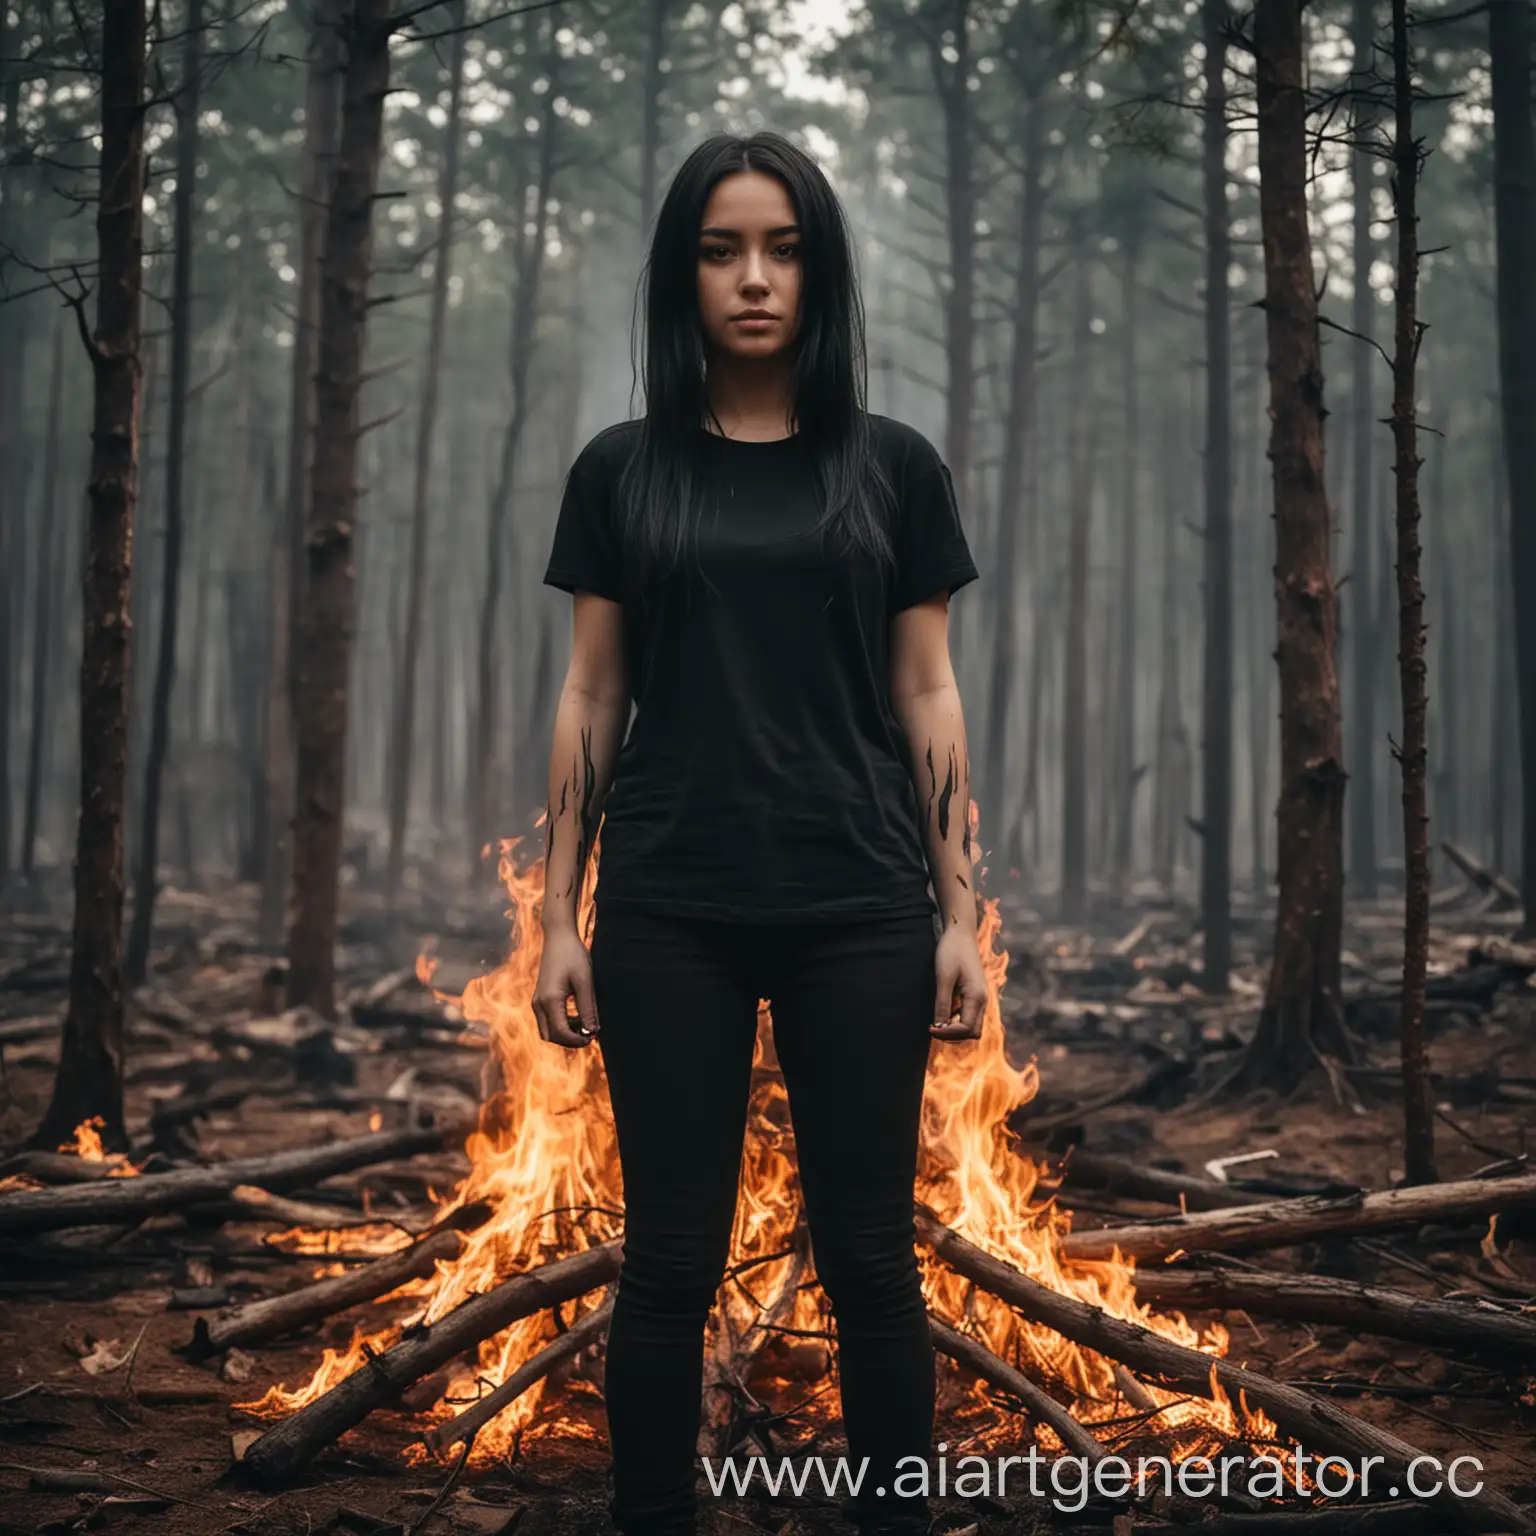 Girl-in-Black-Shirt-Holding-Lighter-in-Front-of-Burning-Forest